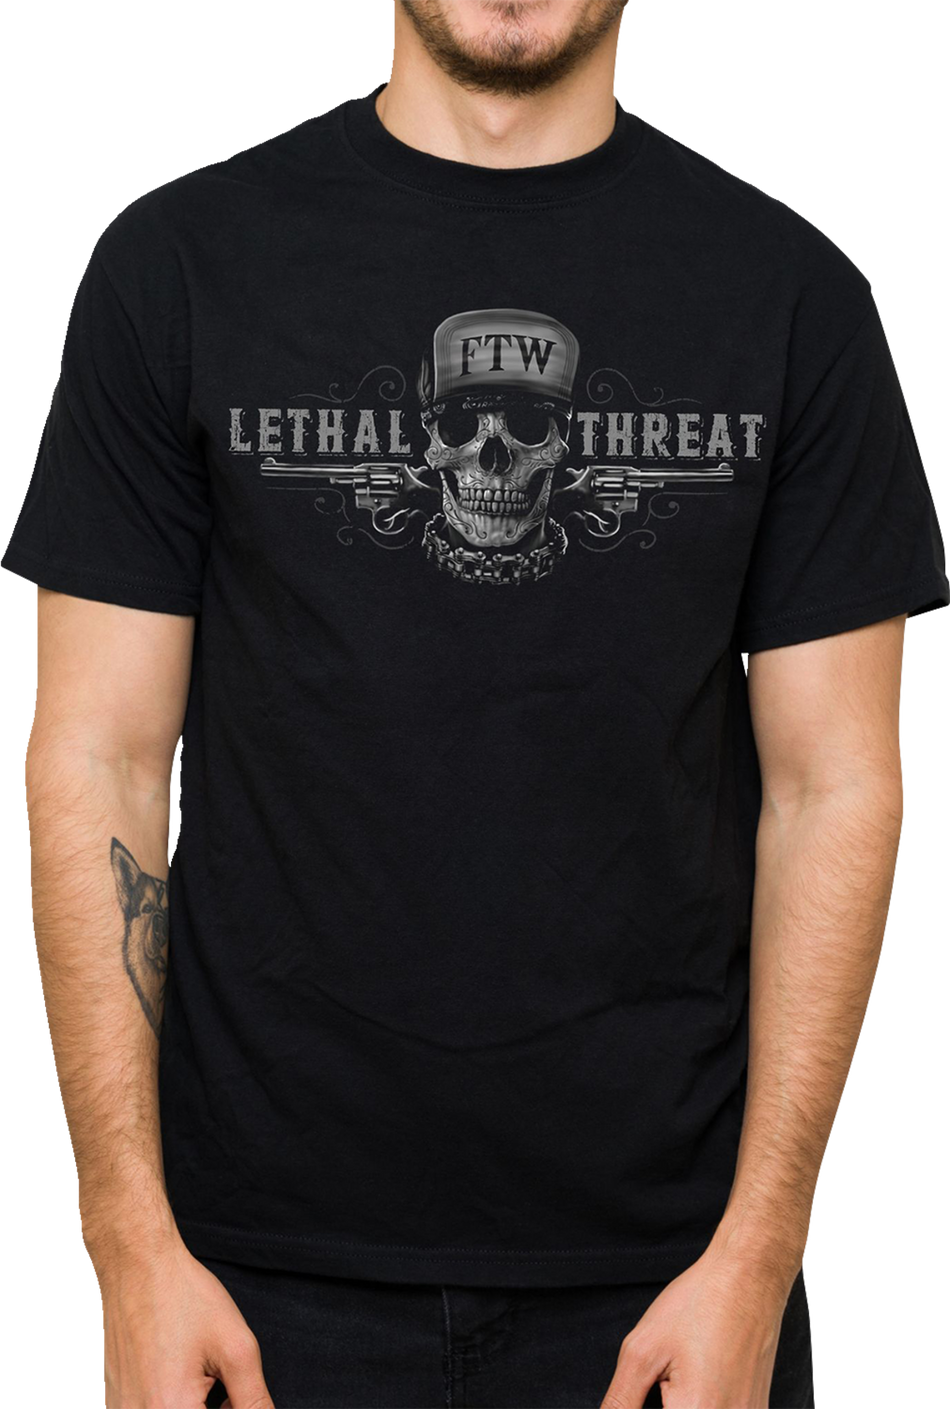 LETHAL THREAT Friend or Foe T-Shirt - Black - Medium LT20904M